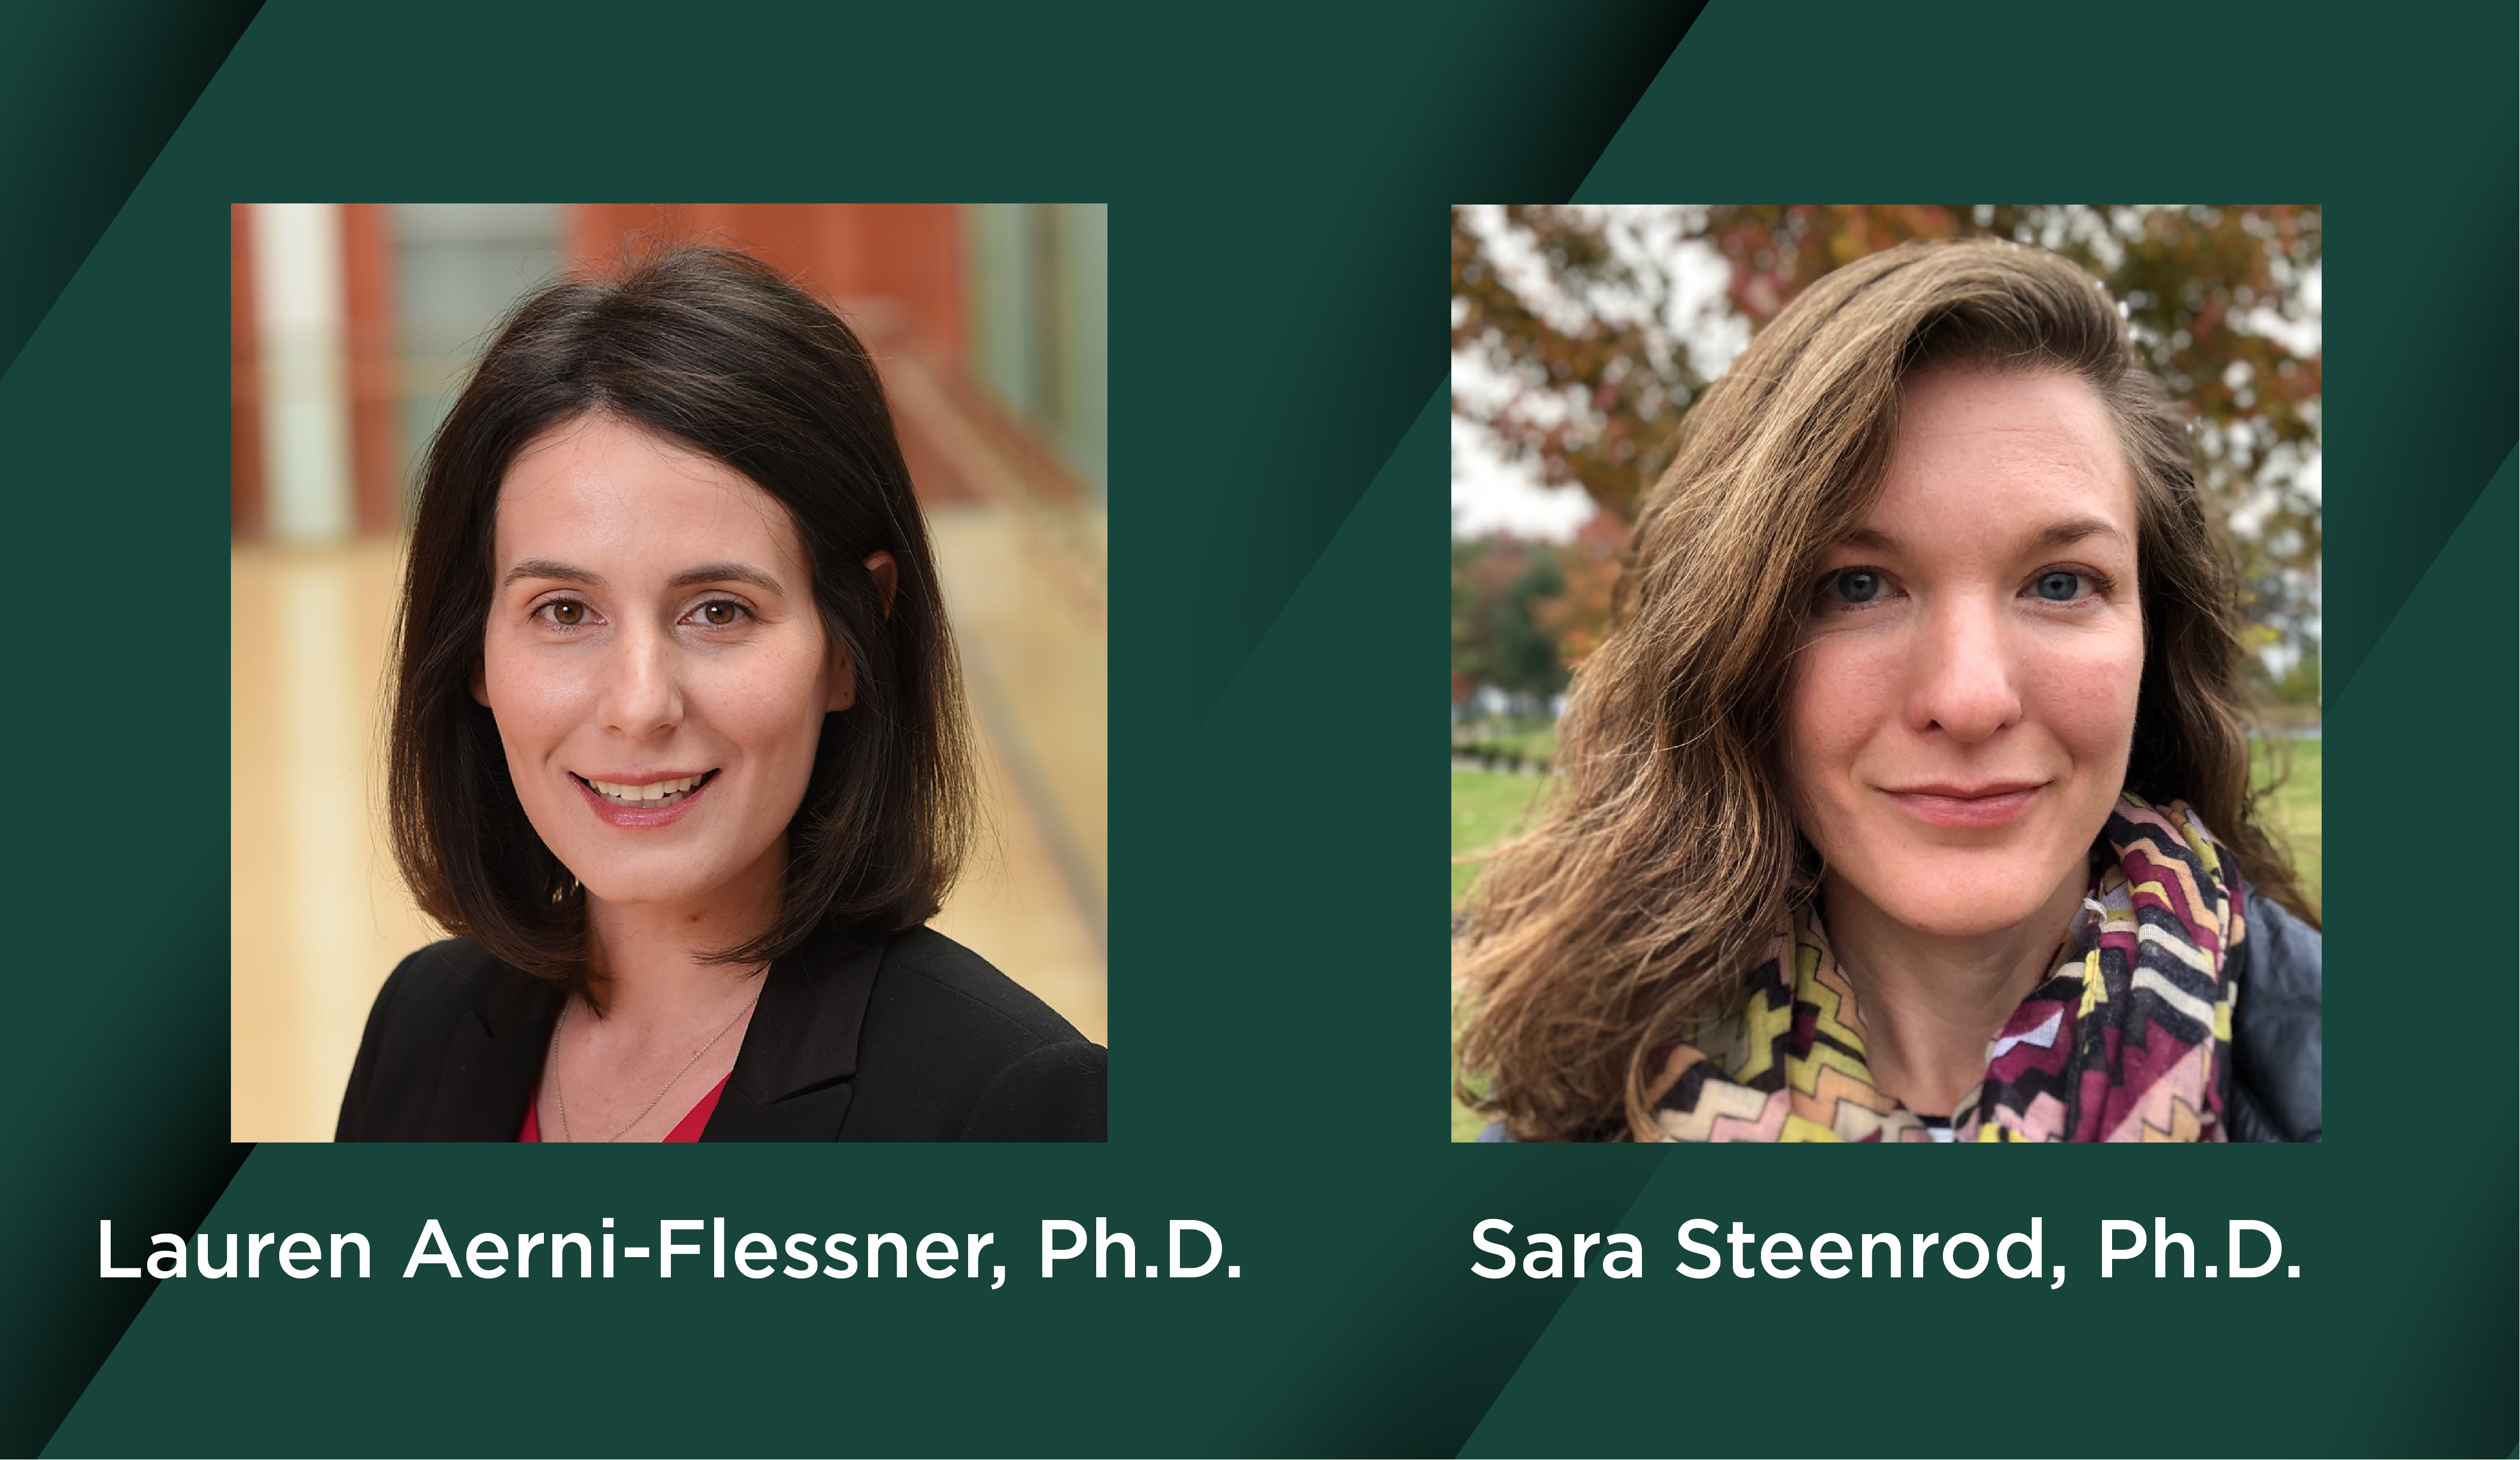 Left, Lauren Aerni-Flessner, Ph.D., a woman with dark brown hair. Right, Sara Steenrod, Ph.D.,a woman with light brown hair